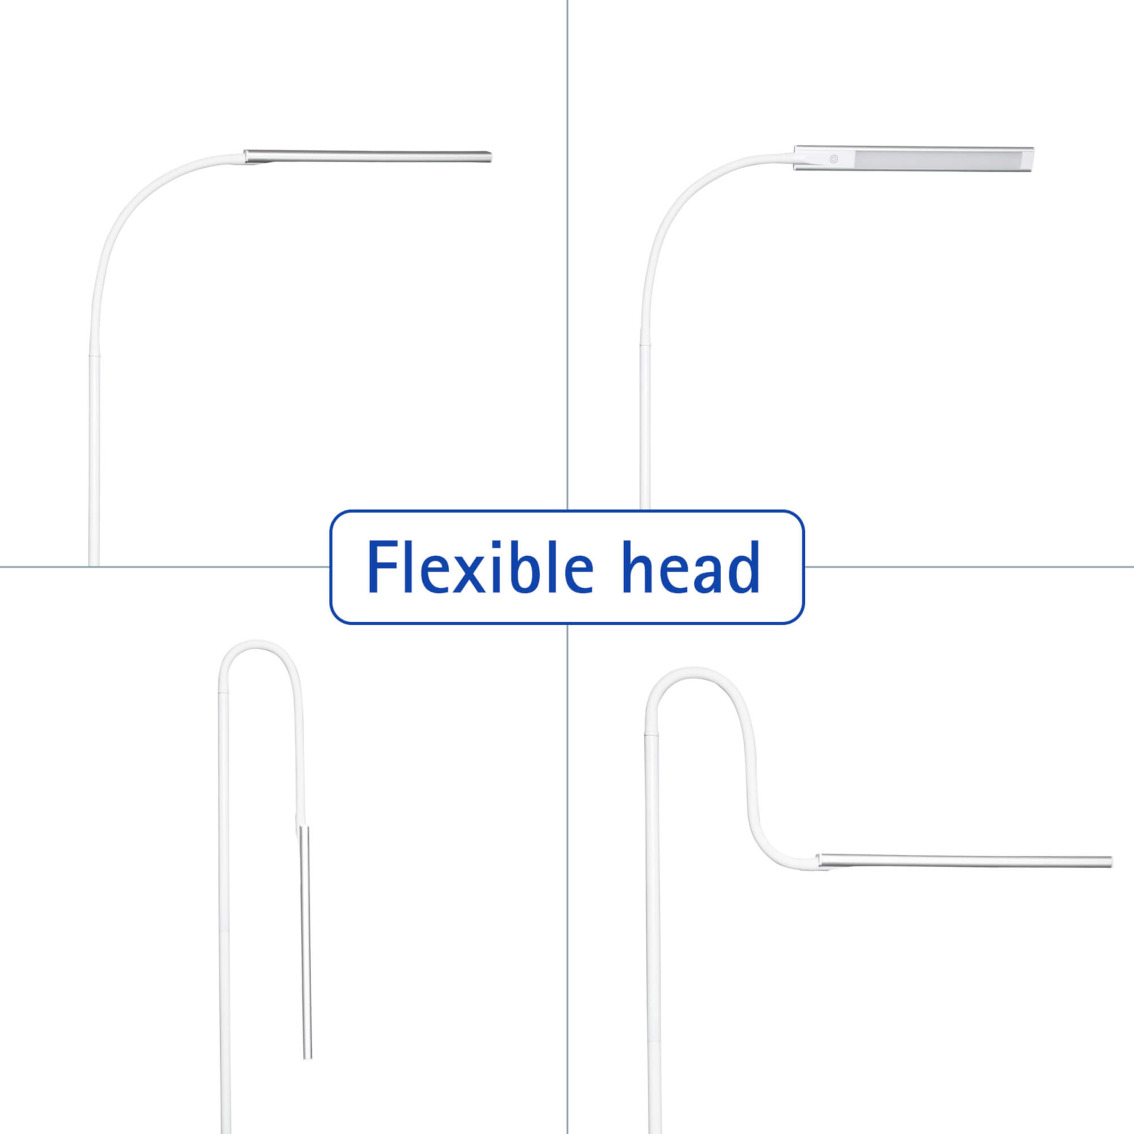  Flexibler Kopf